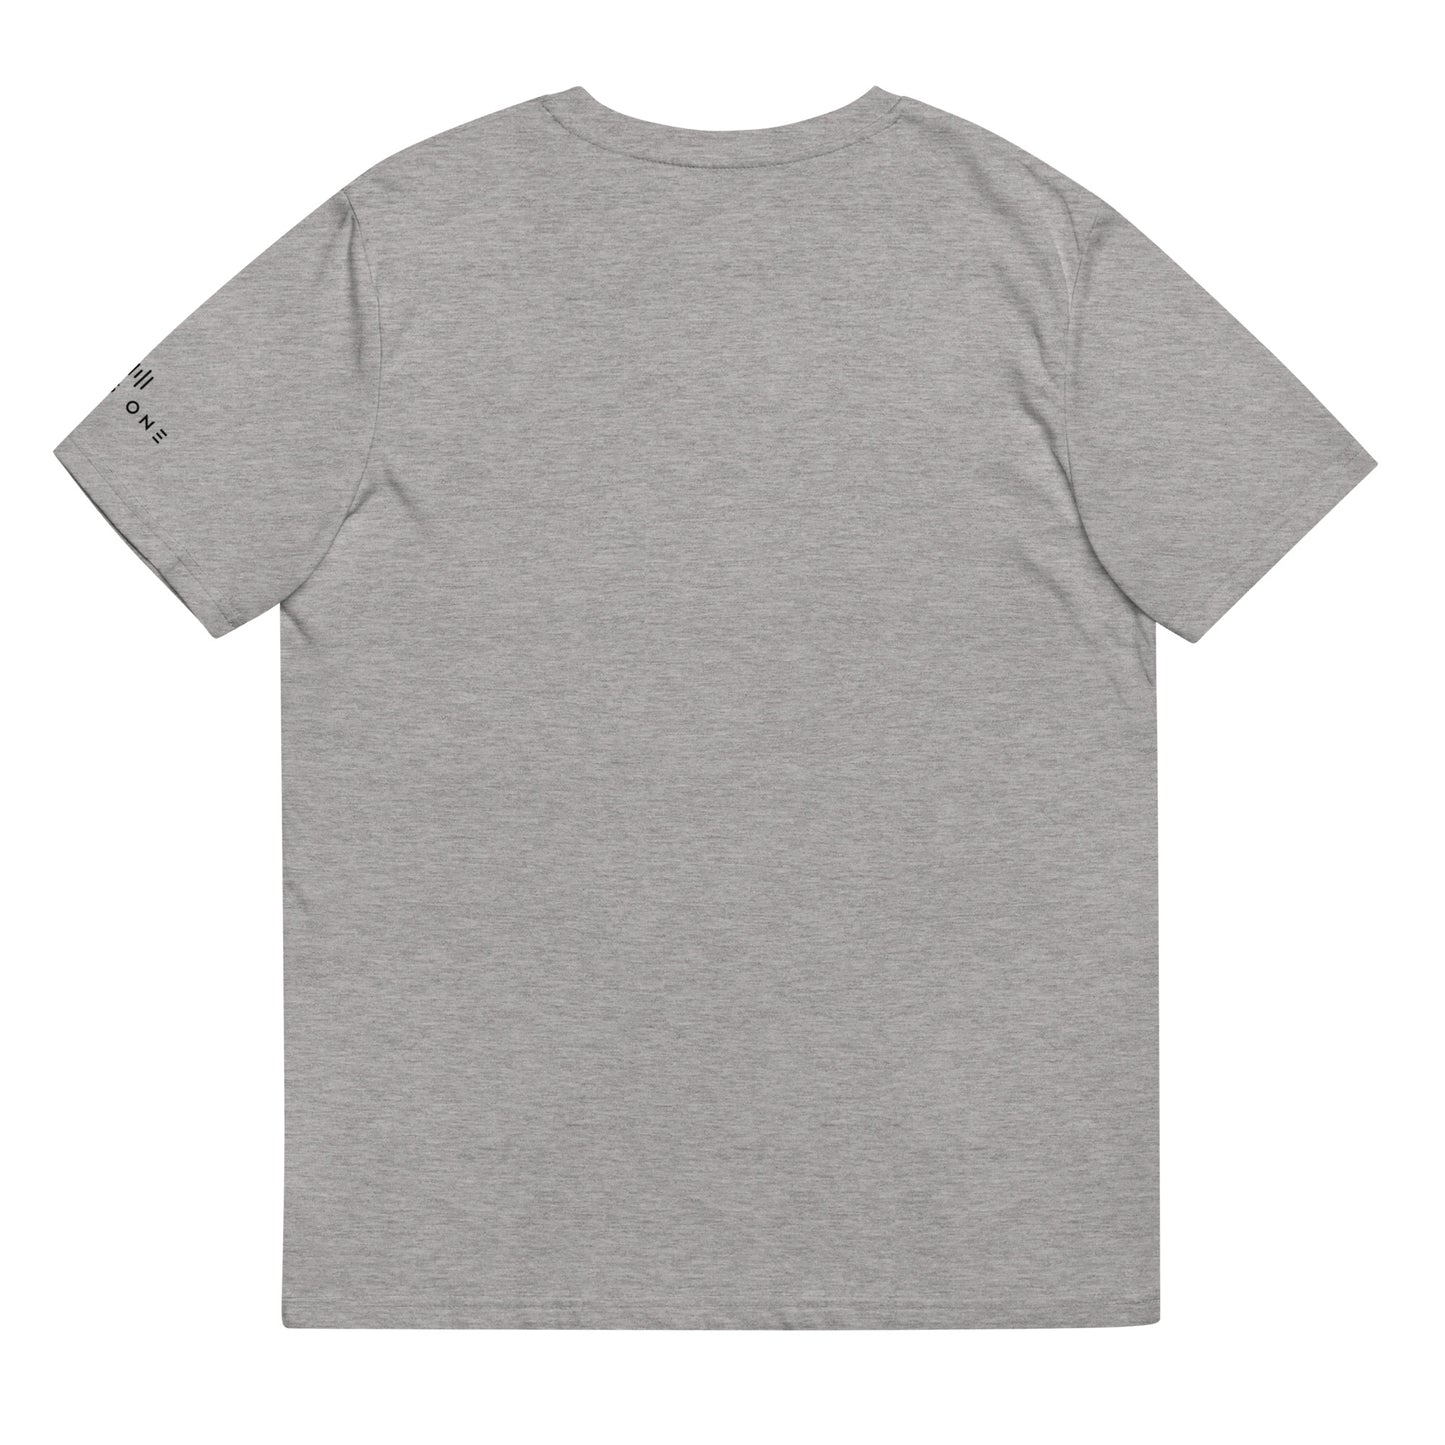 NFTM (US THEM) Unisex organic cotton t-shirt (Black Text)